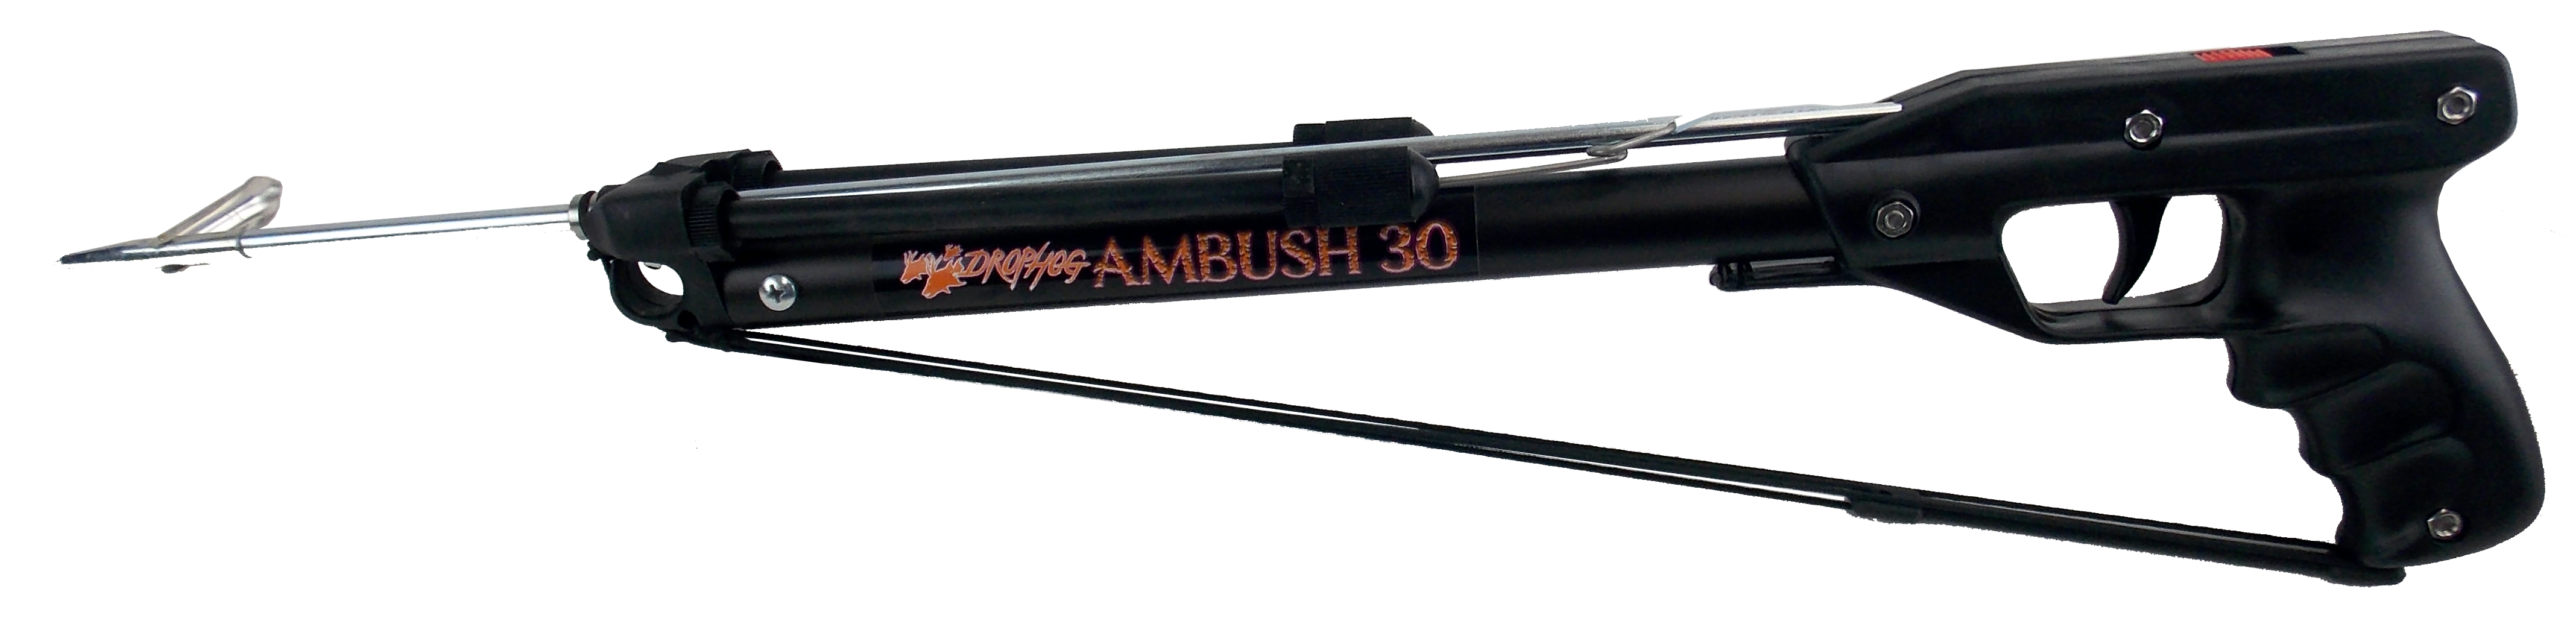 Drophog™ Spearfishing Ambush 30 Series - Micro Speargun